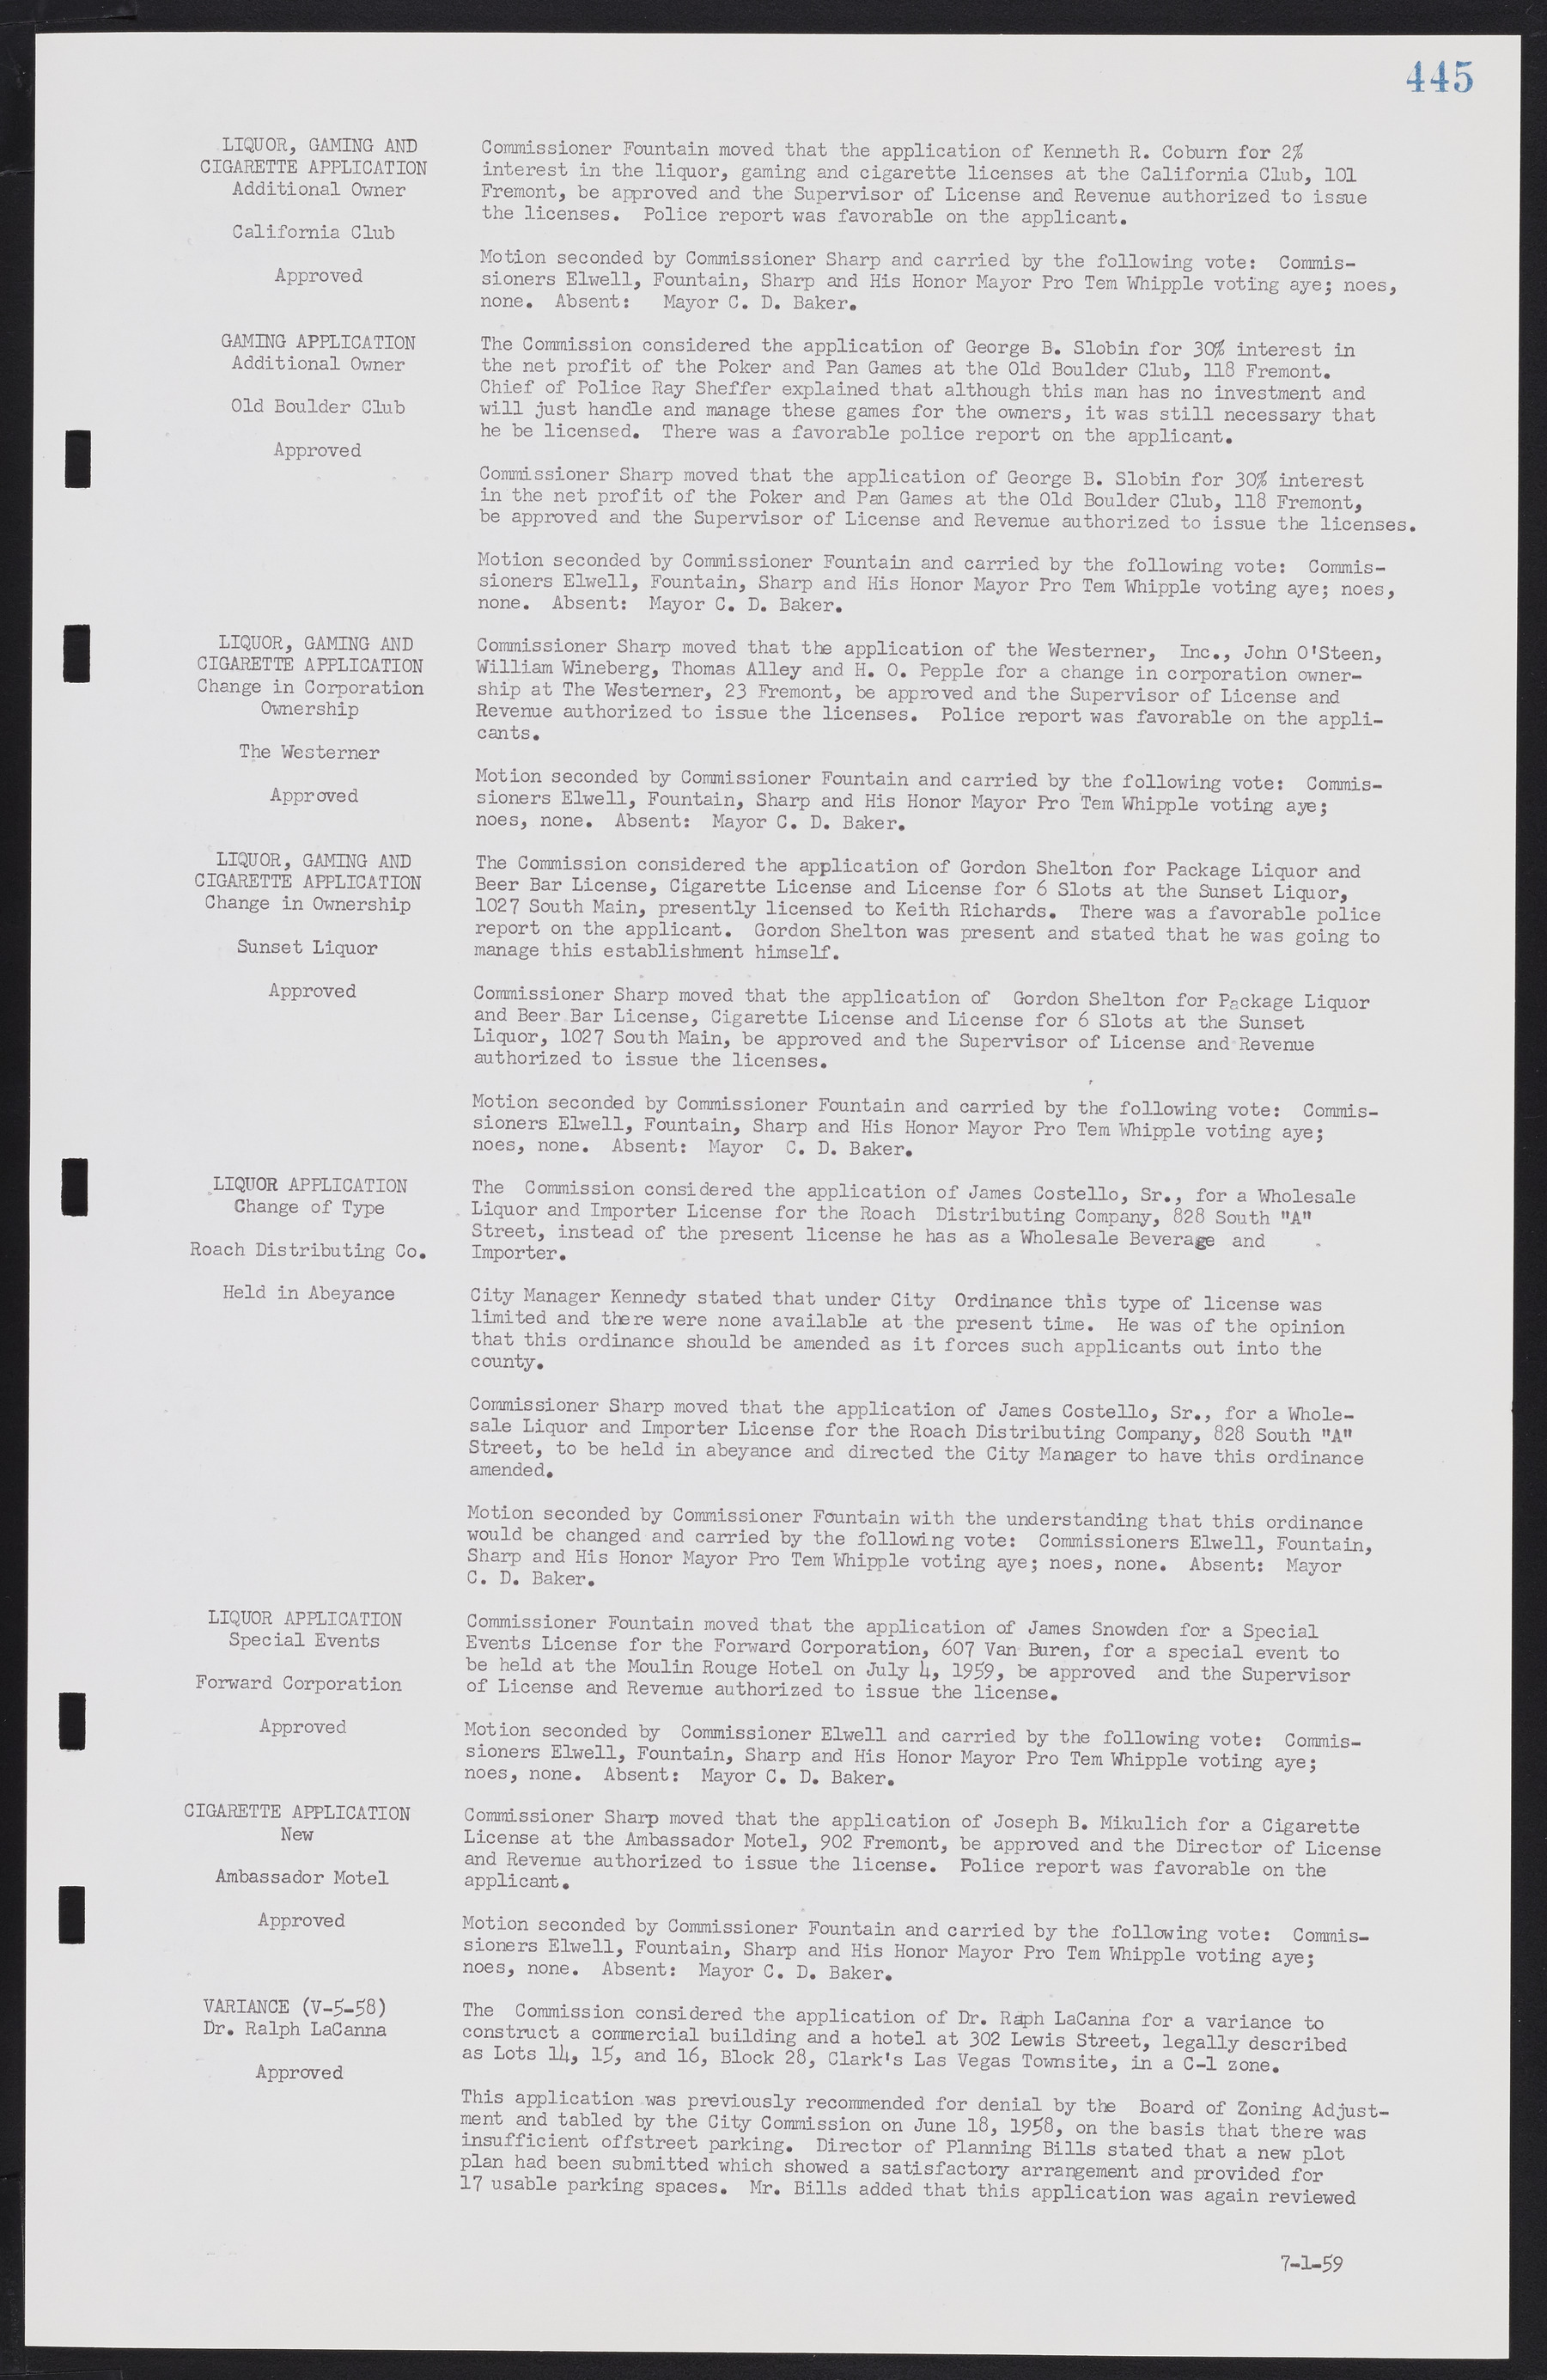 Las Vegas City Commission Minutes, November 20, 1957 to December 2, 1959, lvc000011-481